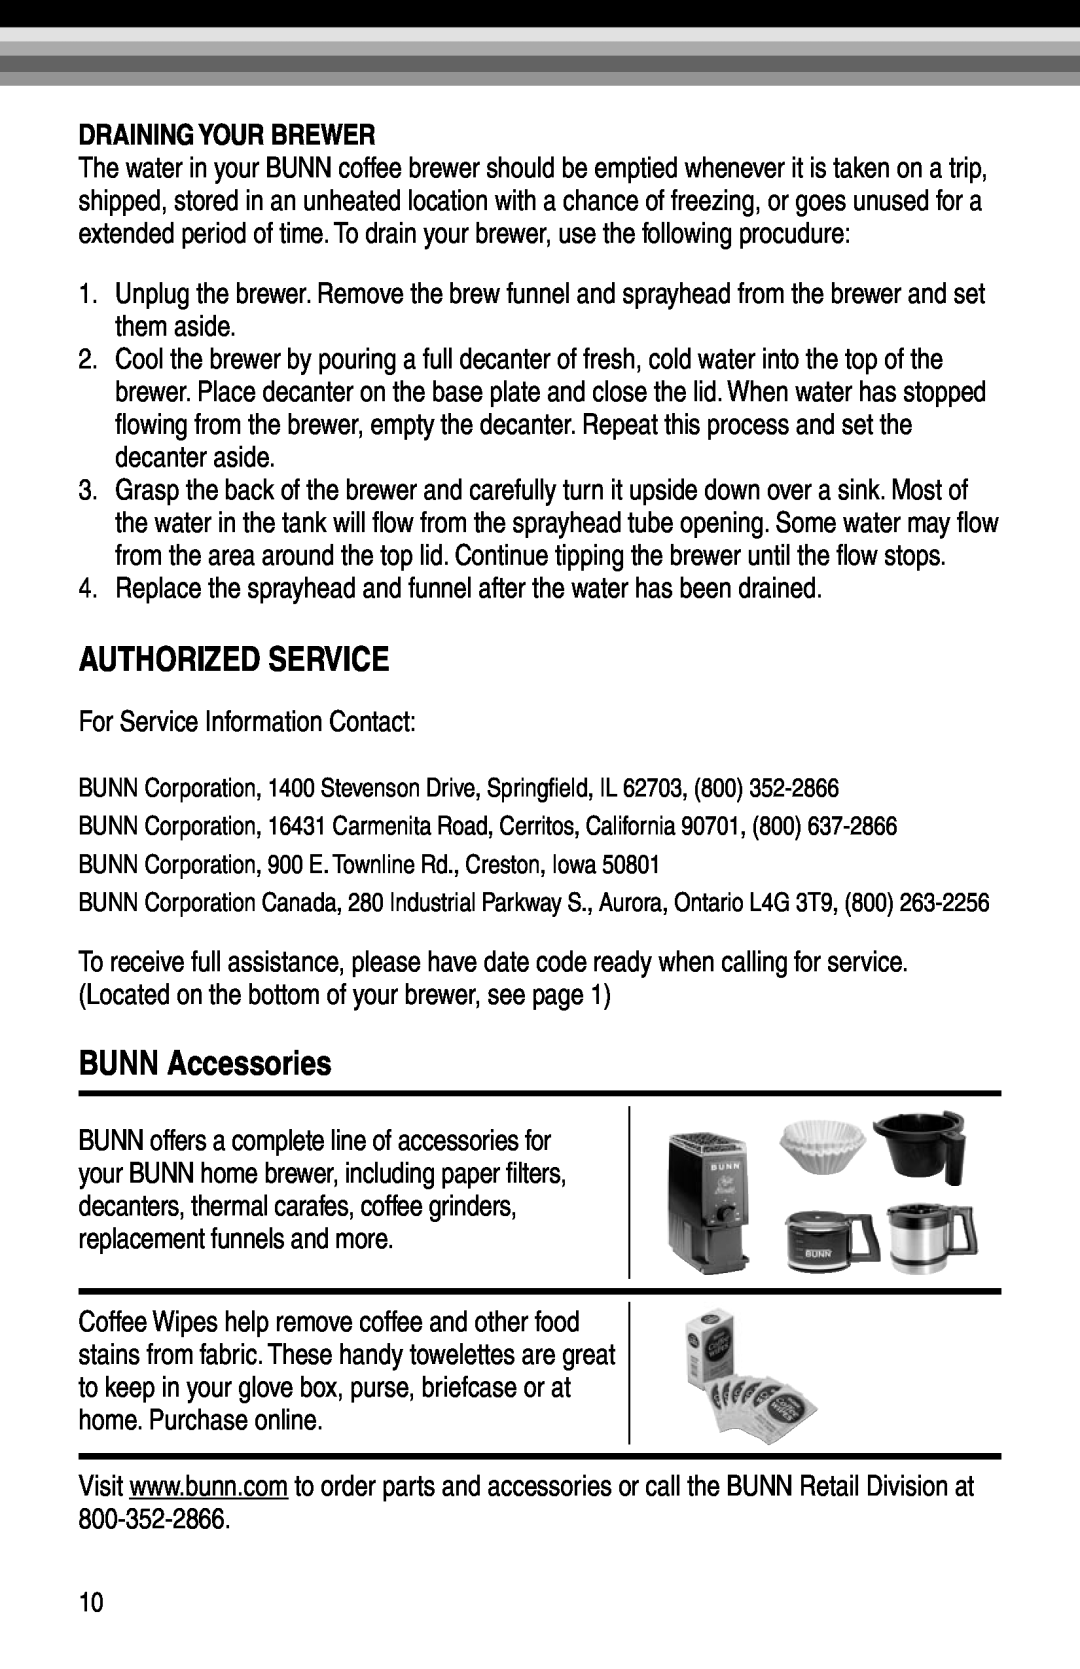 Bunn NHBX-W, NHBX-B manual Authorized Service, BUNN Accessories, Draining Your Brewer 